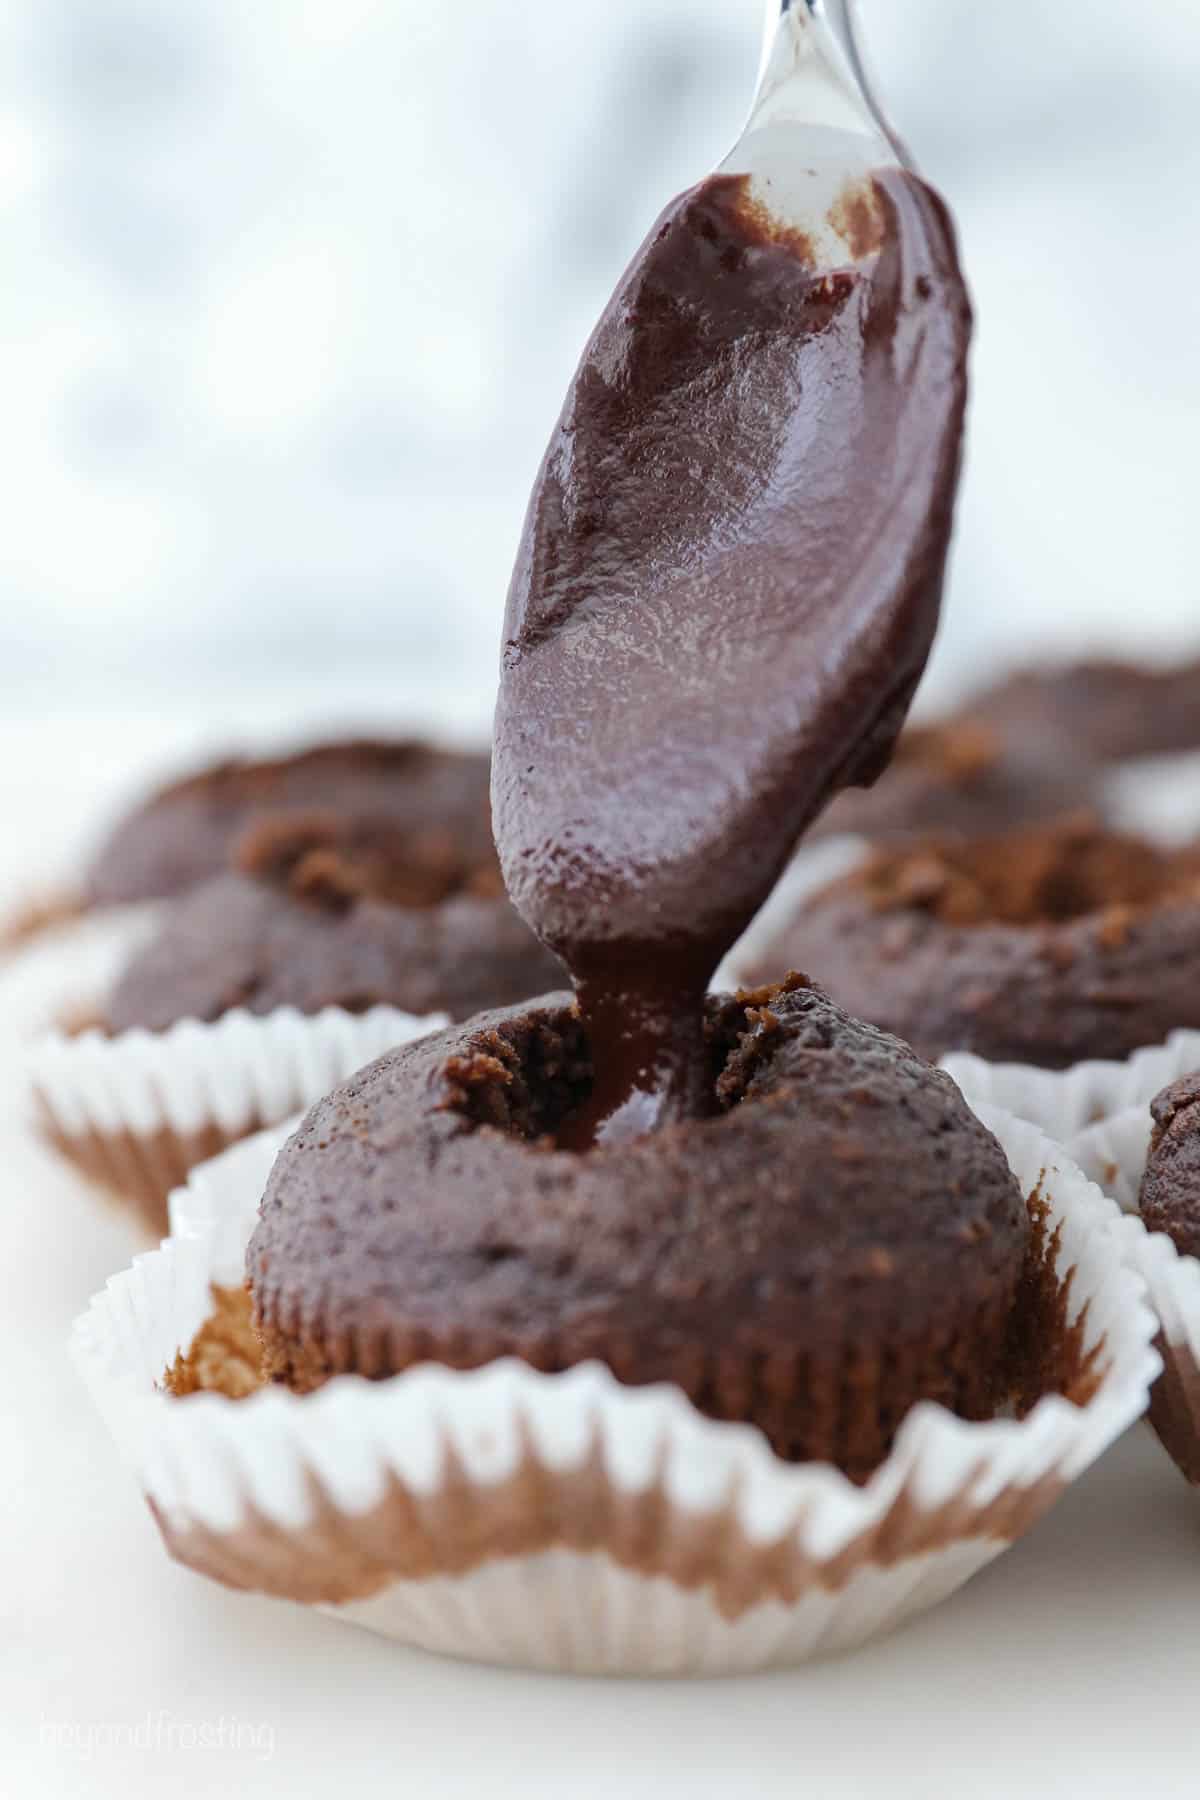 gluten-free chocolate cupcake being filled with chocolate ganache